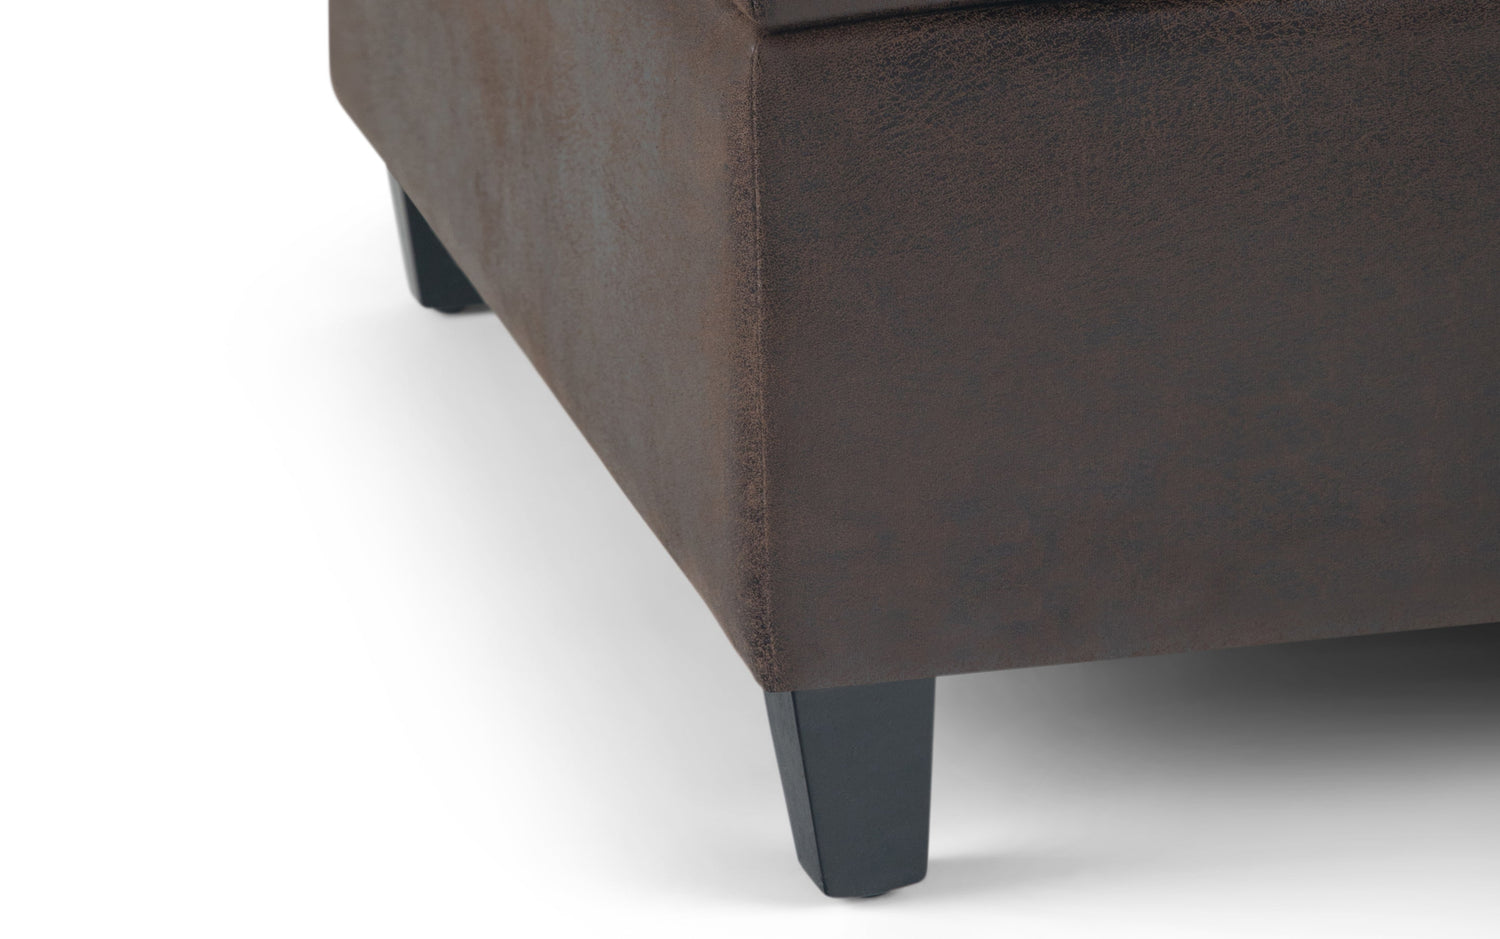 Distressed Brown Distressed Vegan Leather | Harrison Coffee Table Storage Ottoman